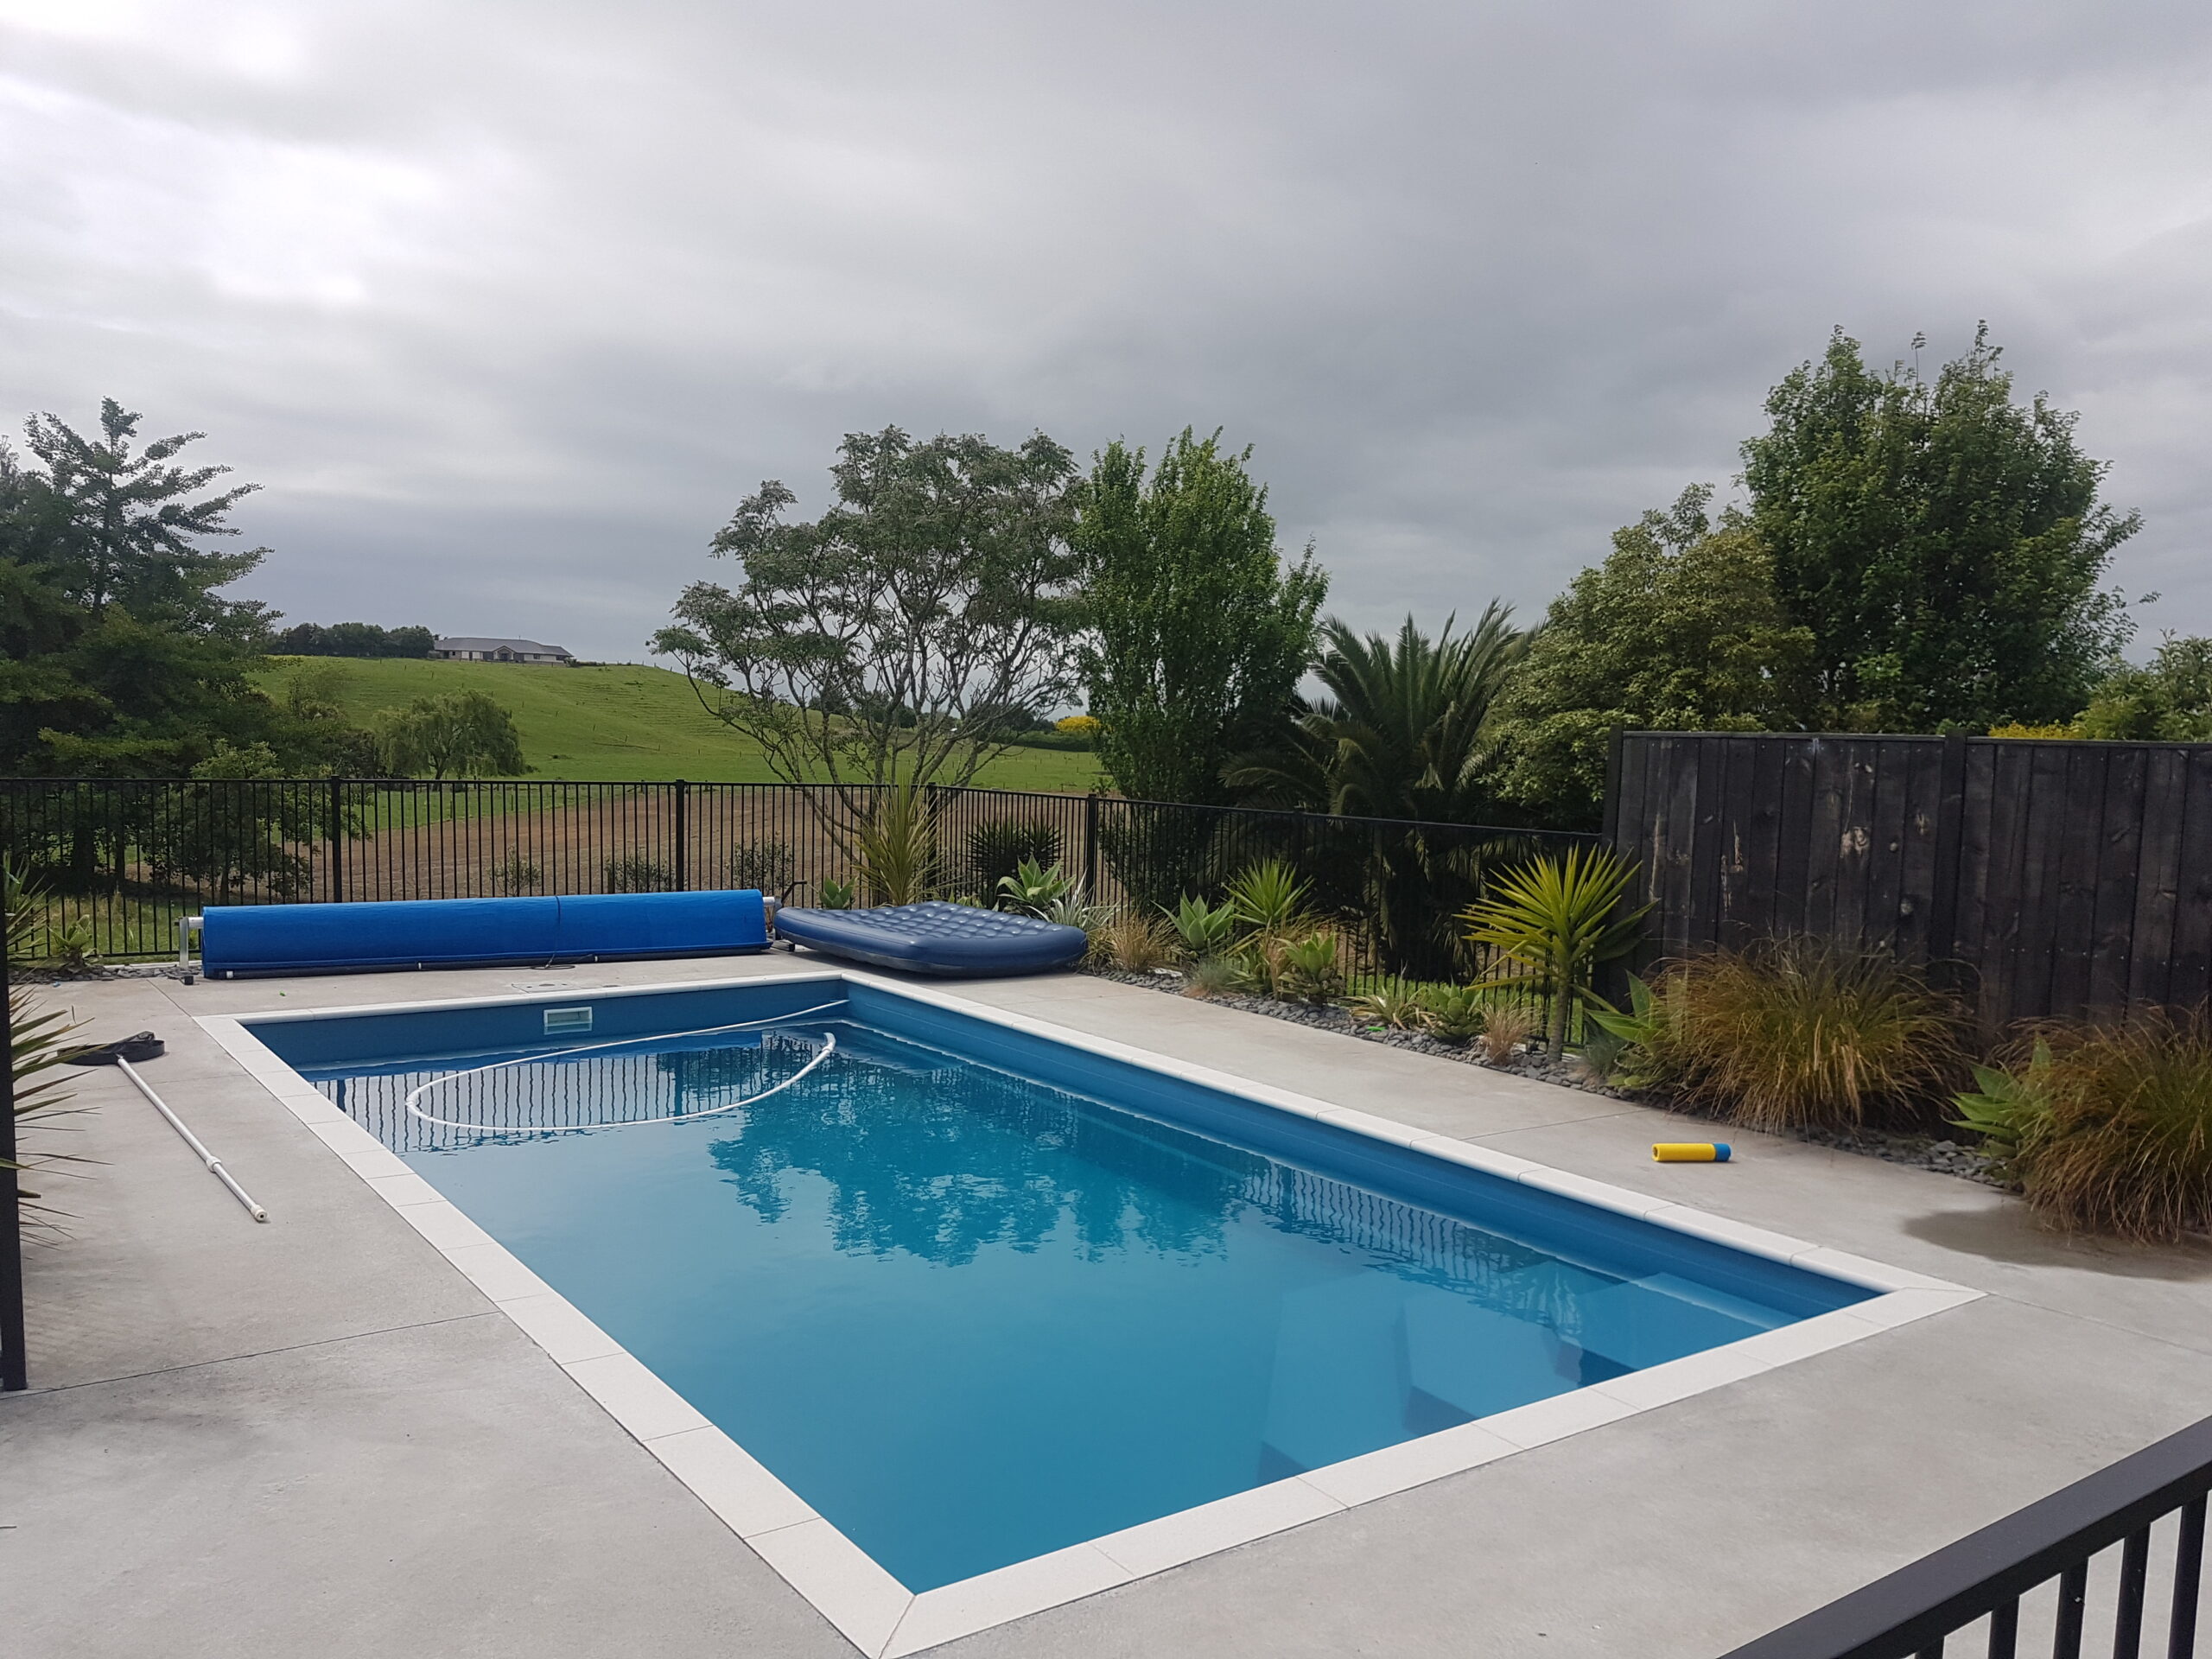 6 meter inground fibreglass swimming pool in auckland